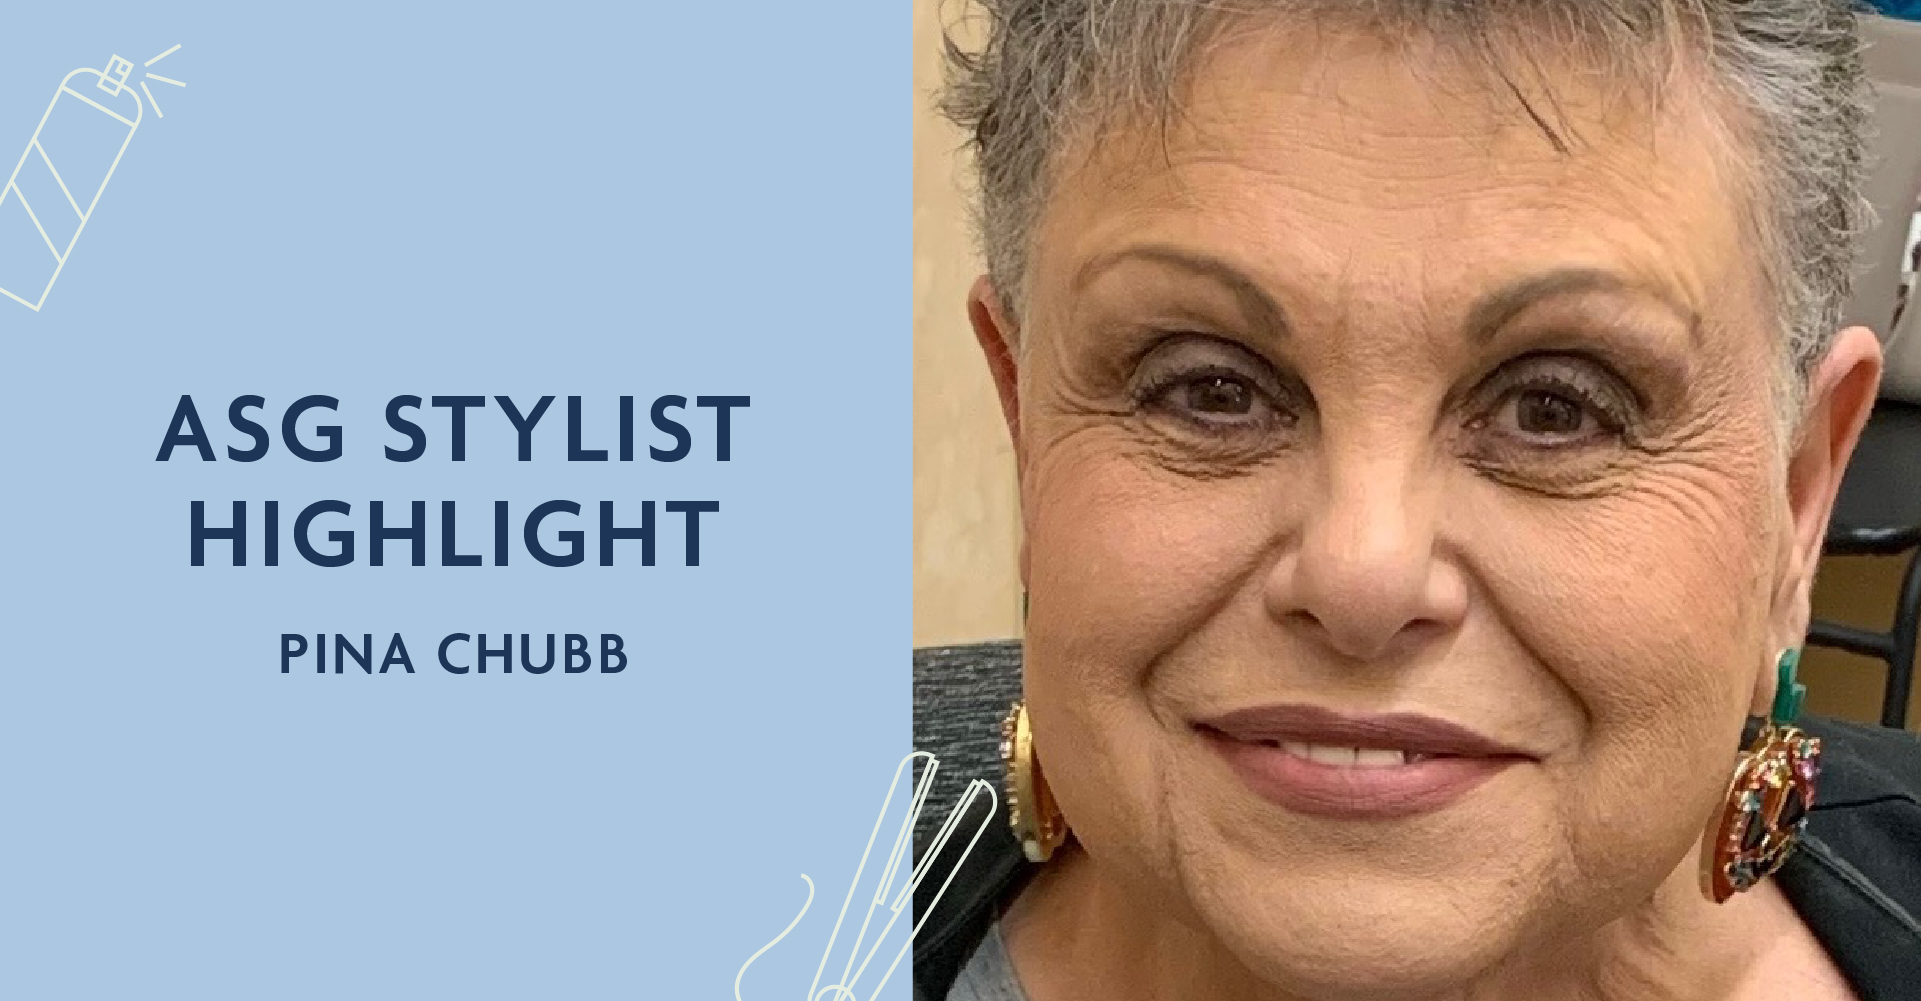 August Stylist Highlight - Pina Chubb